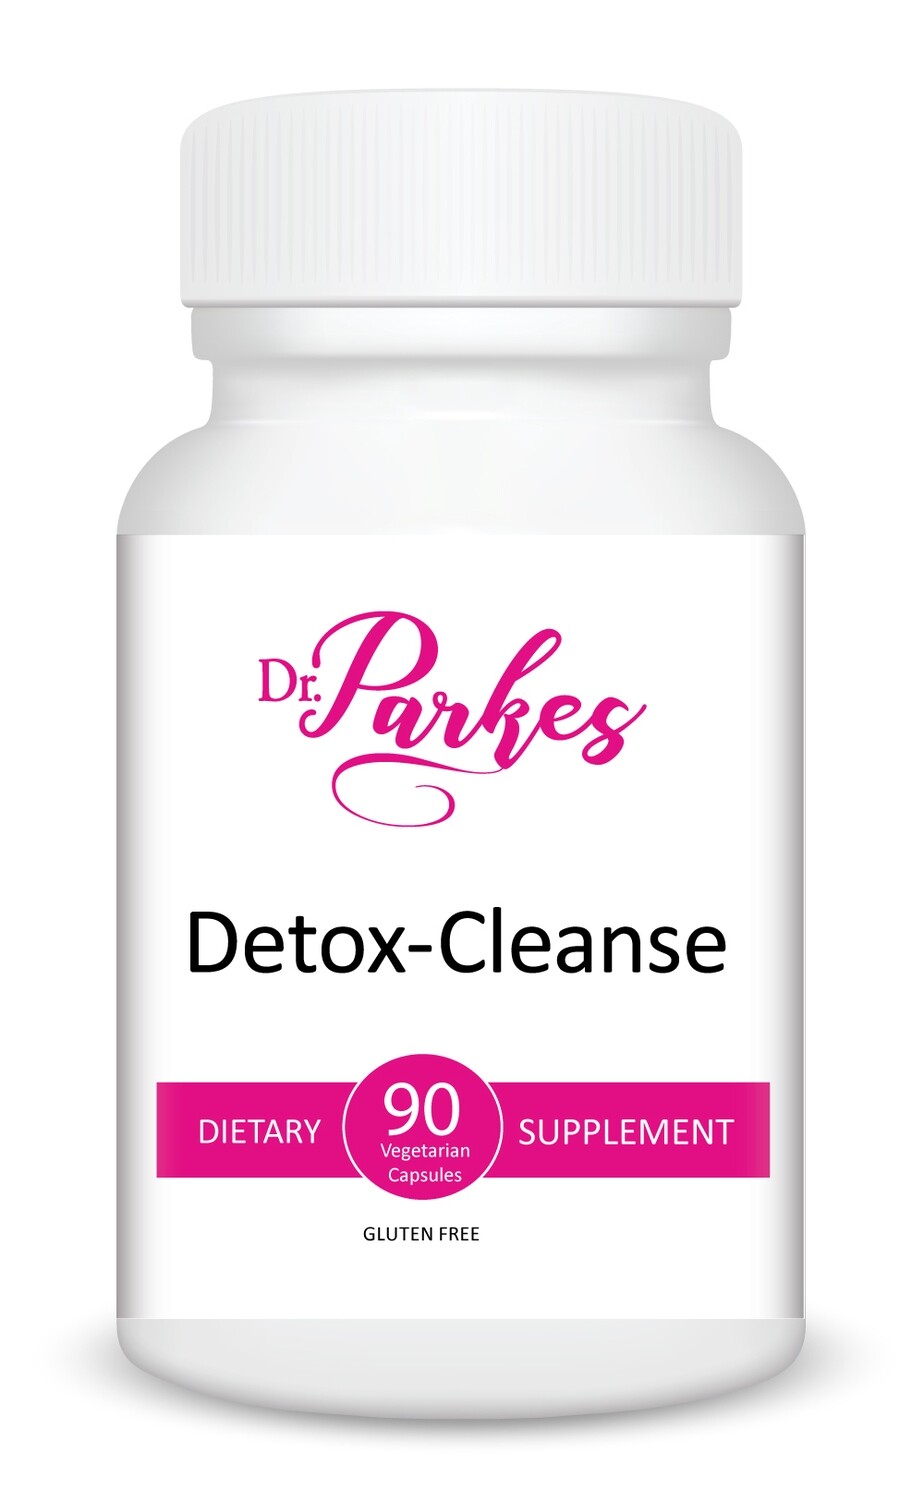 Detox-Cleanse